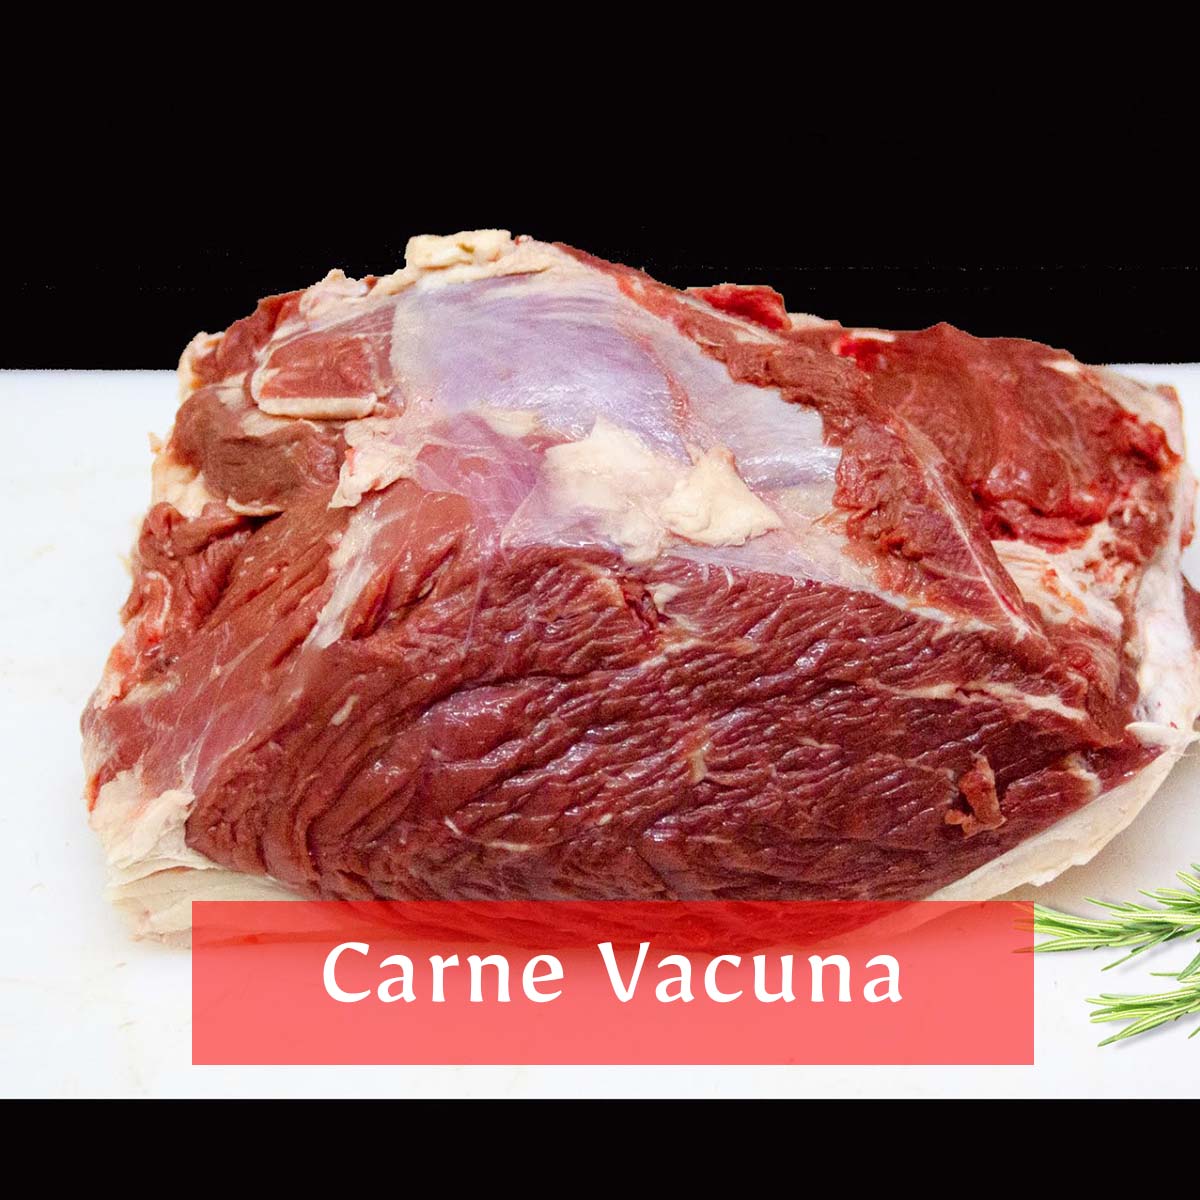 carniceria-online-palito-11-carne-vacuna-000